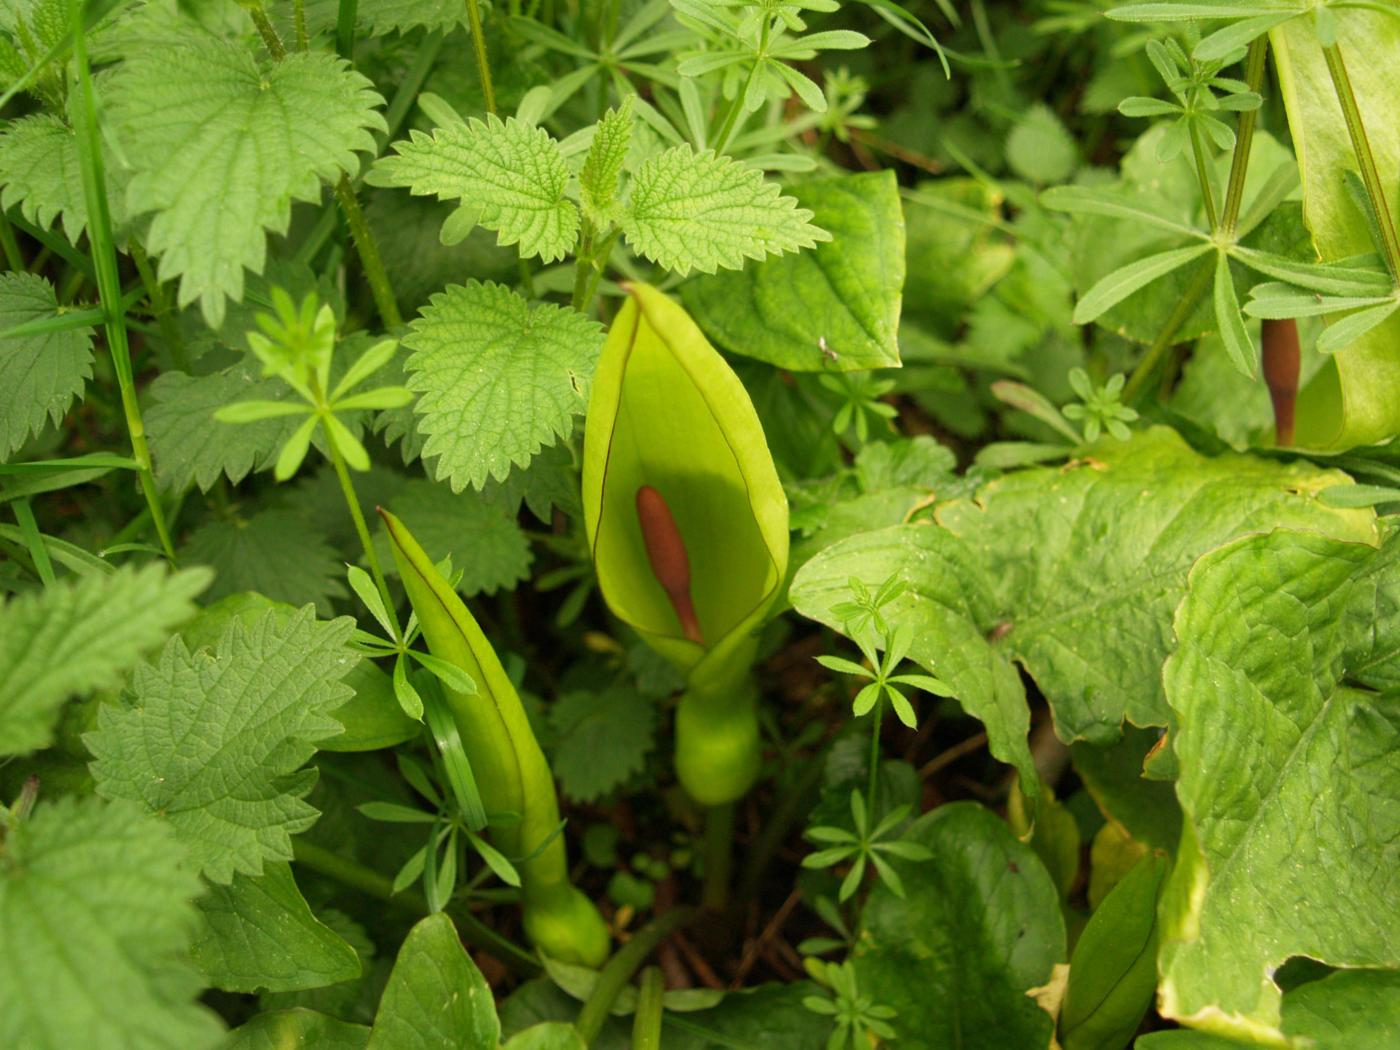 Cuckoo-pint plant